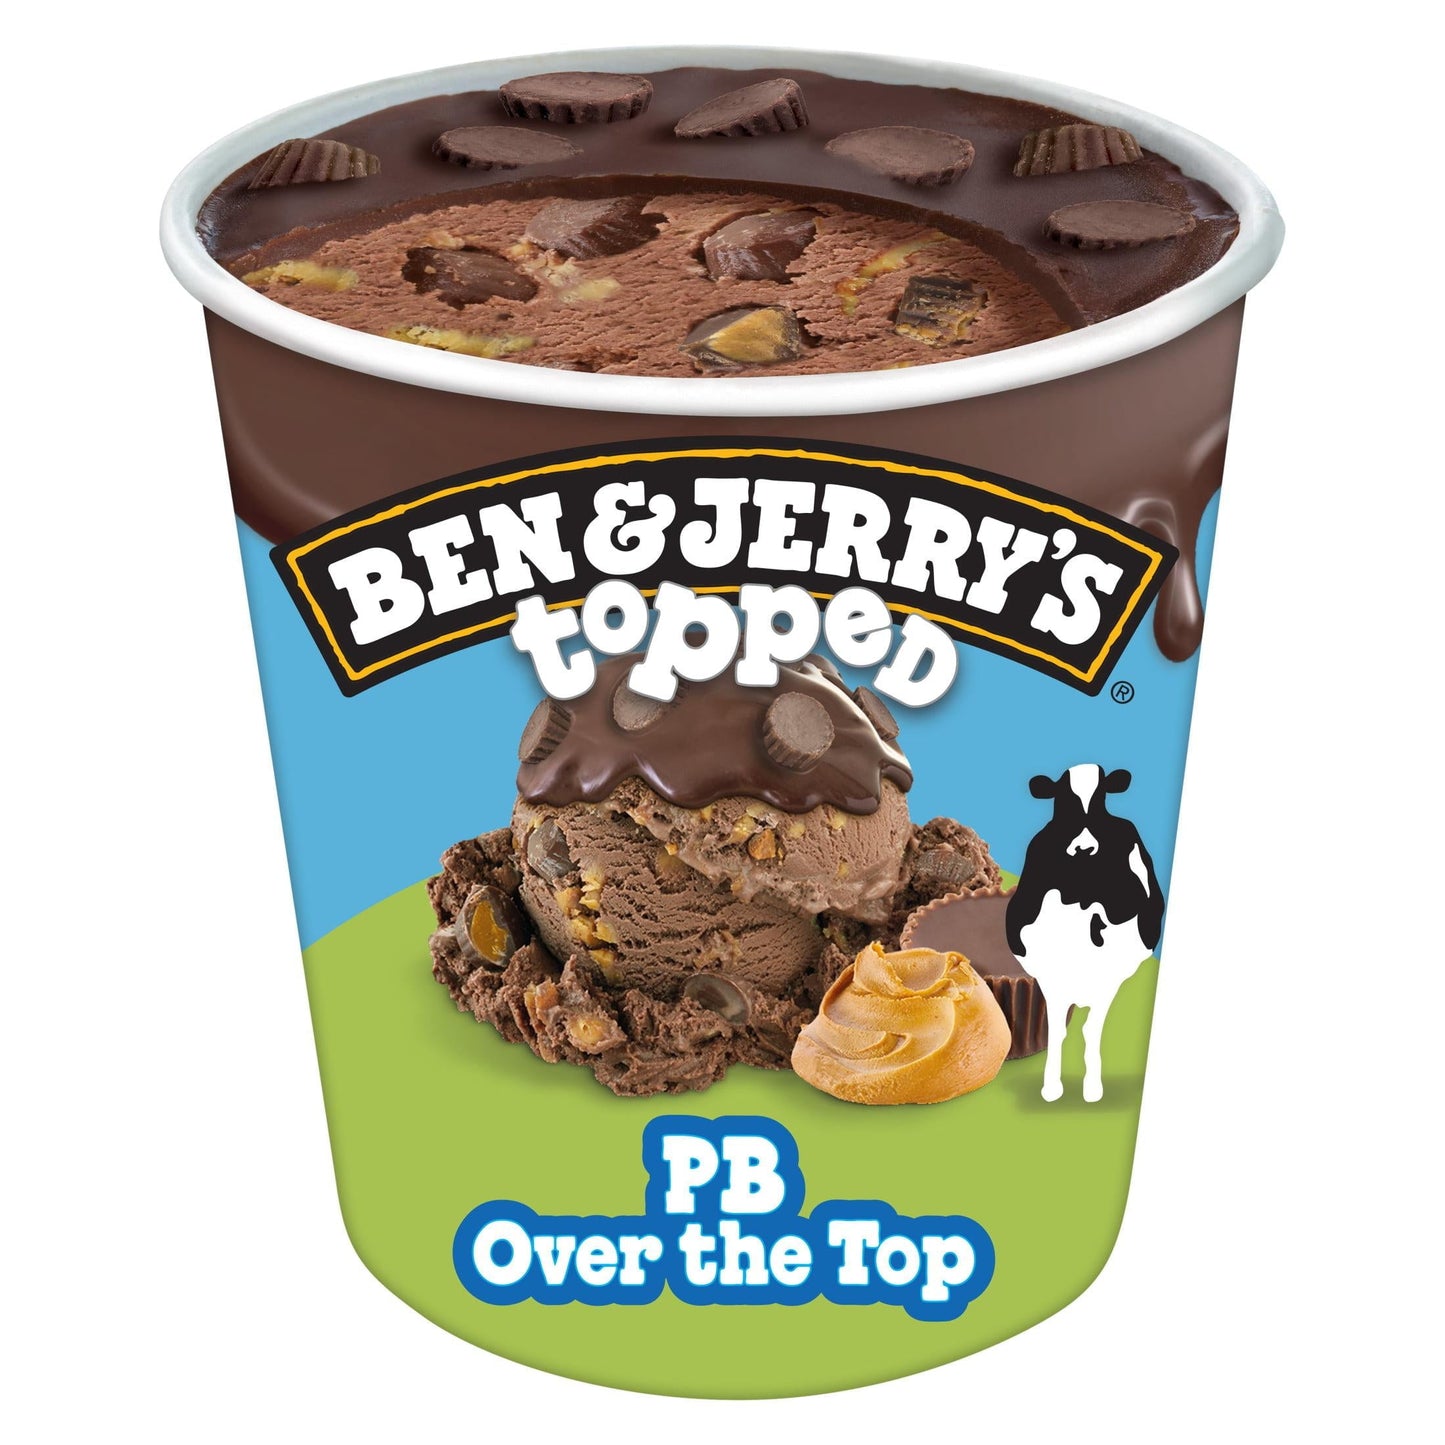 Ben & Jerry's top PB Over the Top Ice Cream, 1 Pint